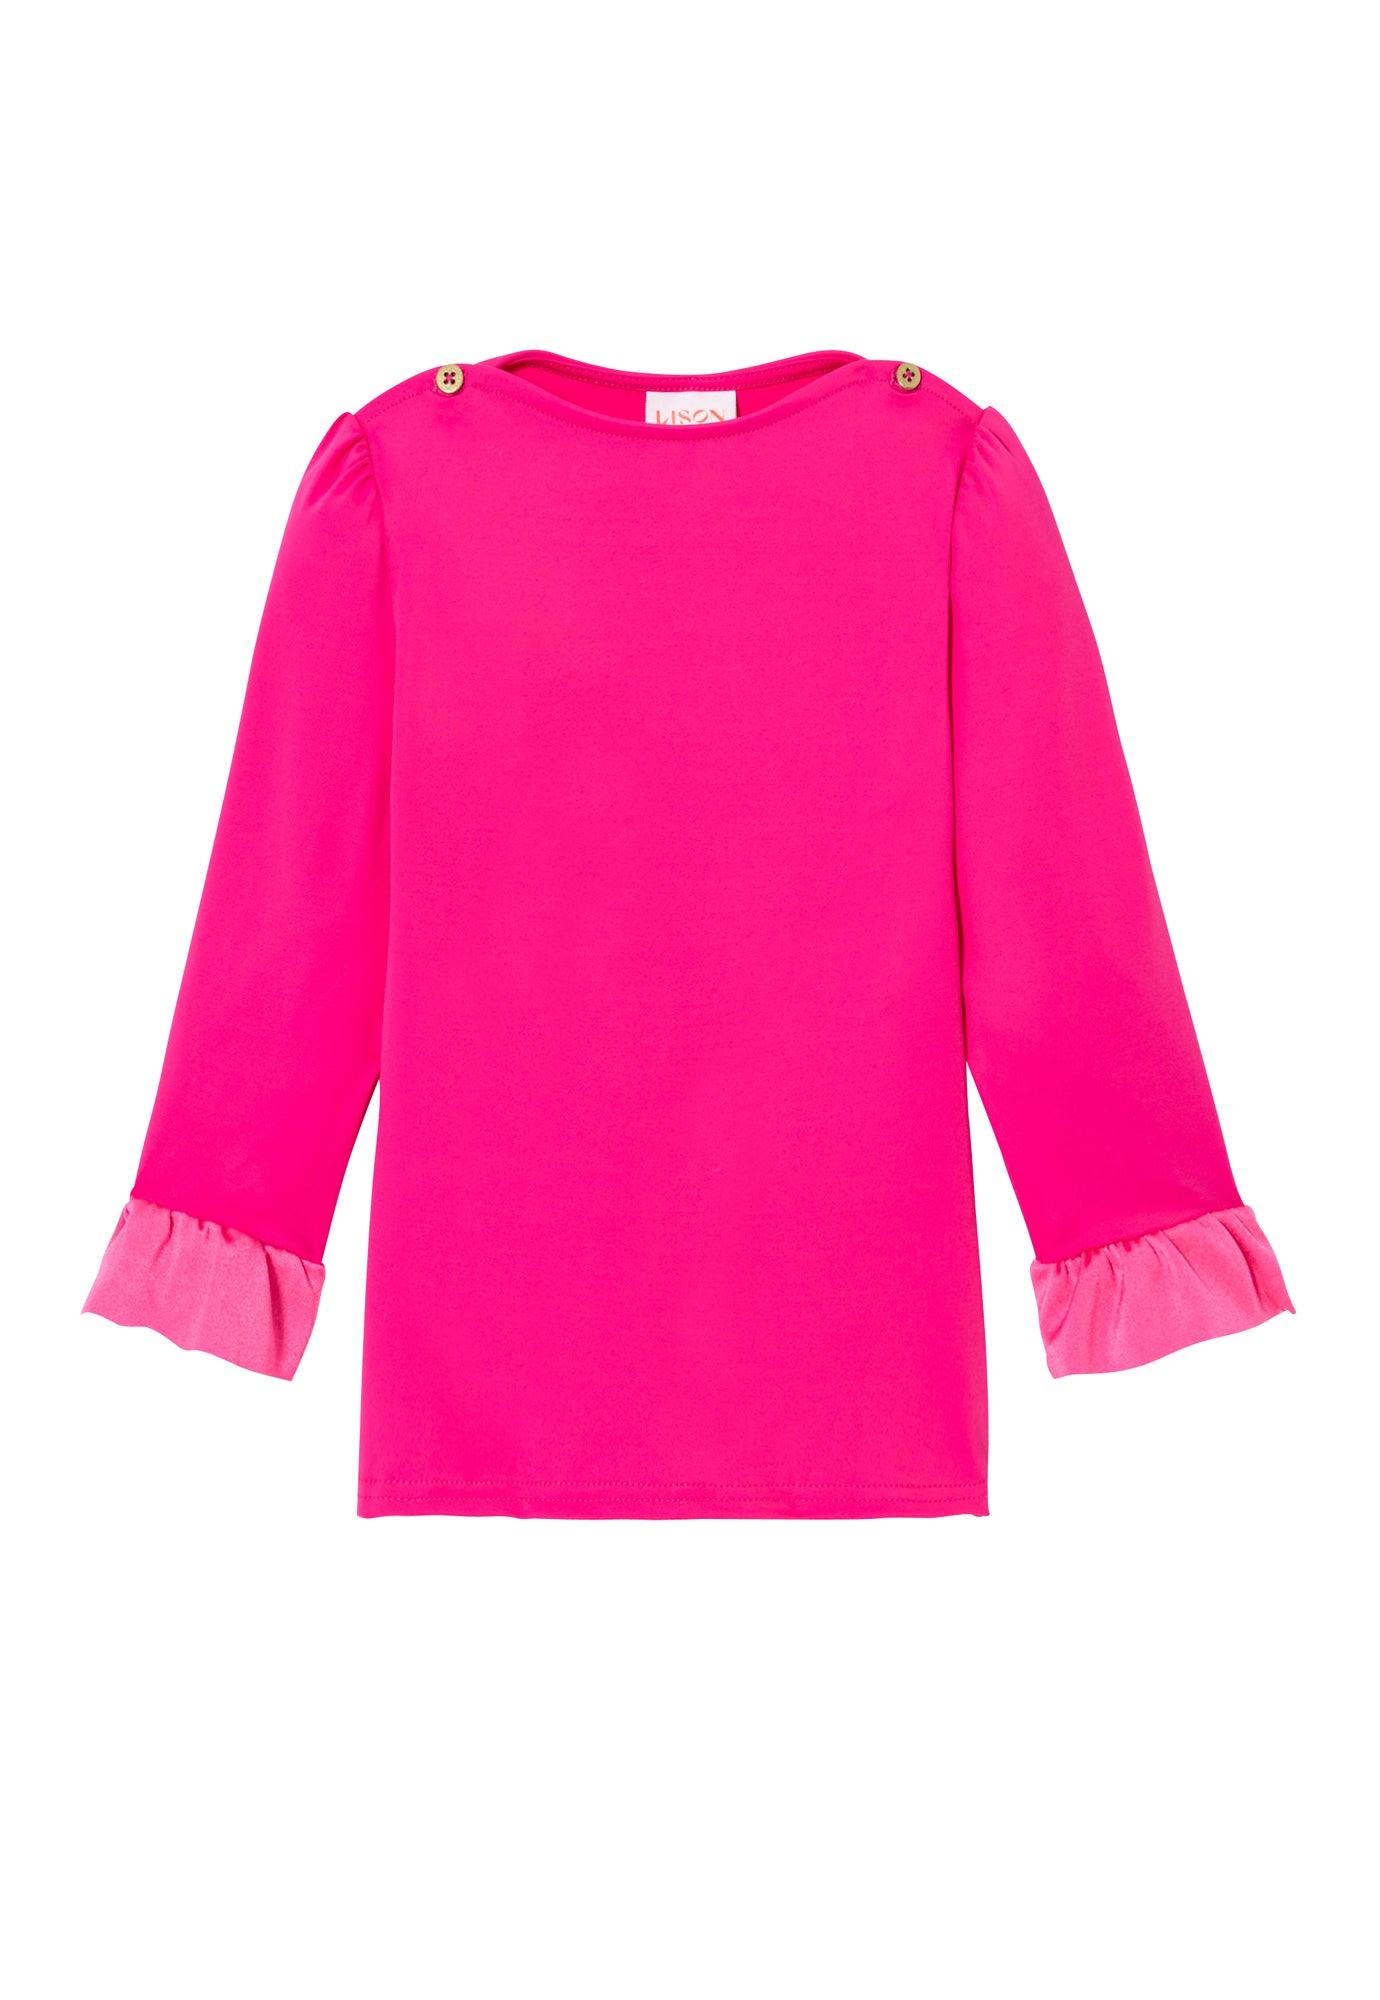 Tee-shirt anti UV fille, UPF 50+, rose bonbon - Lison Paris